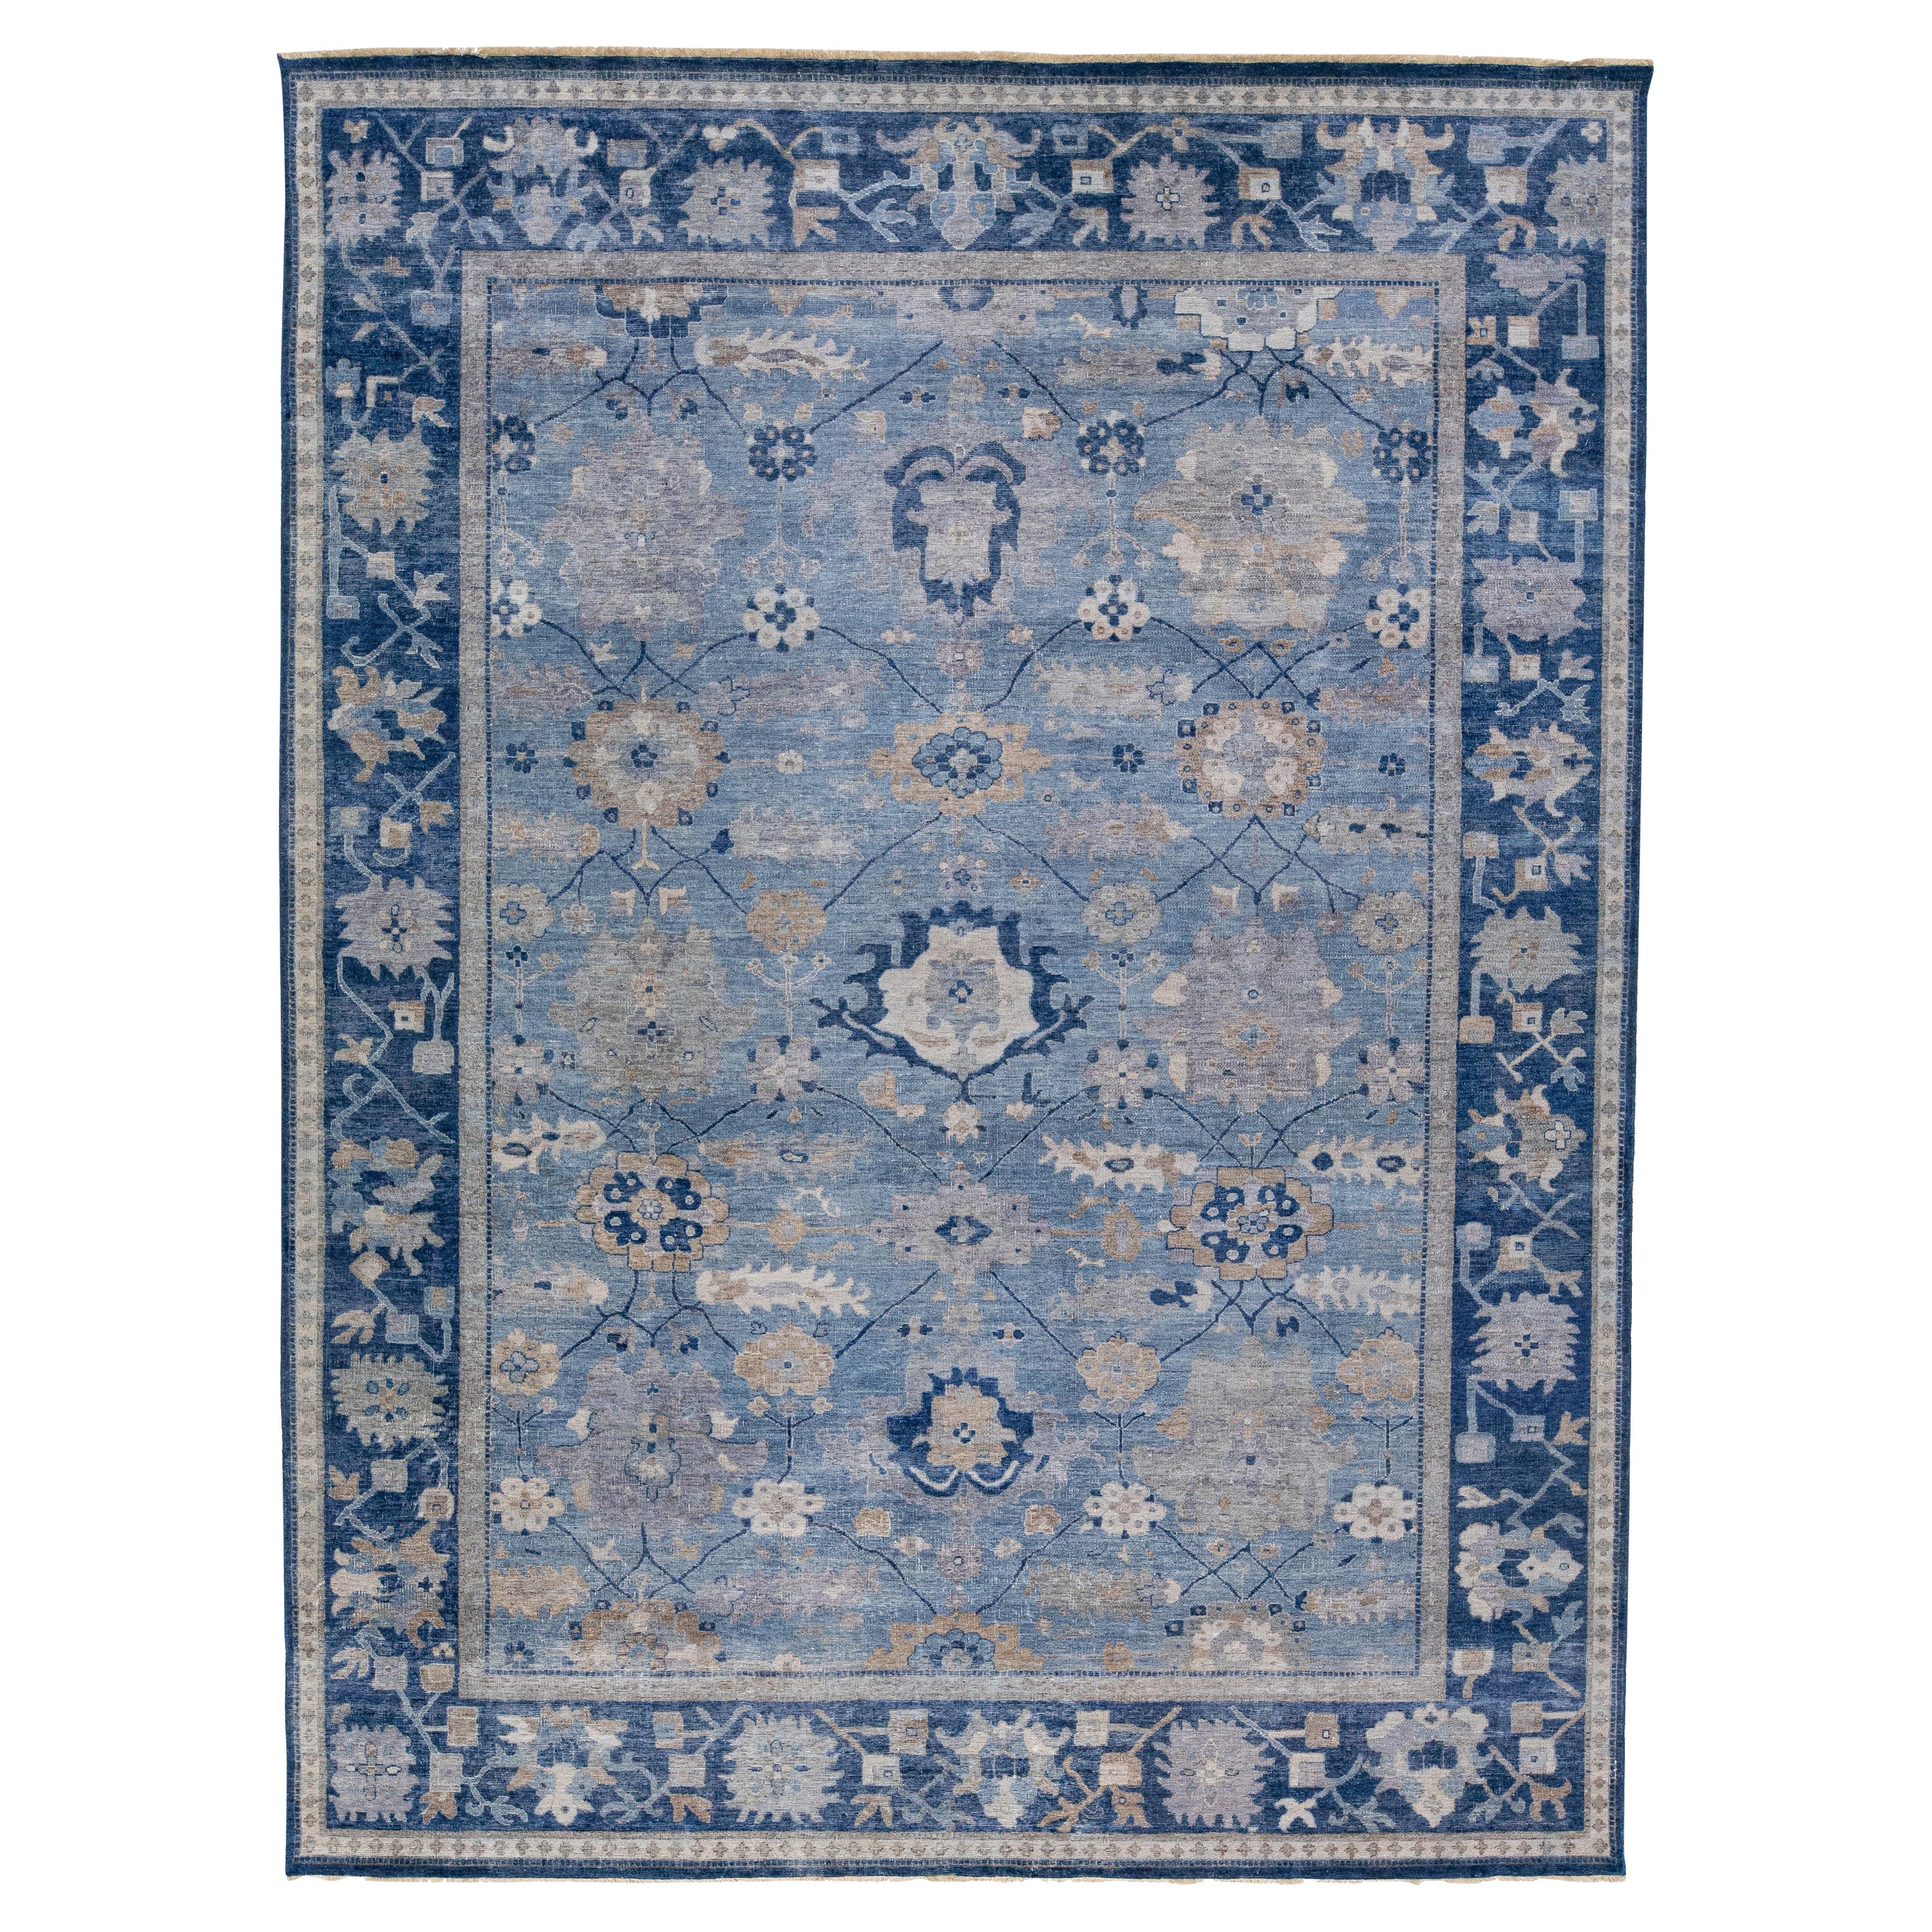 Blue Apadana's Artisan Collection Handmade Floral Designed Wool Rug For Sale